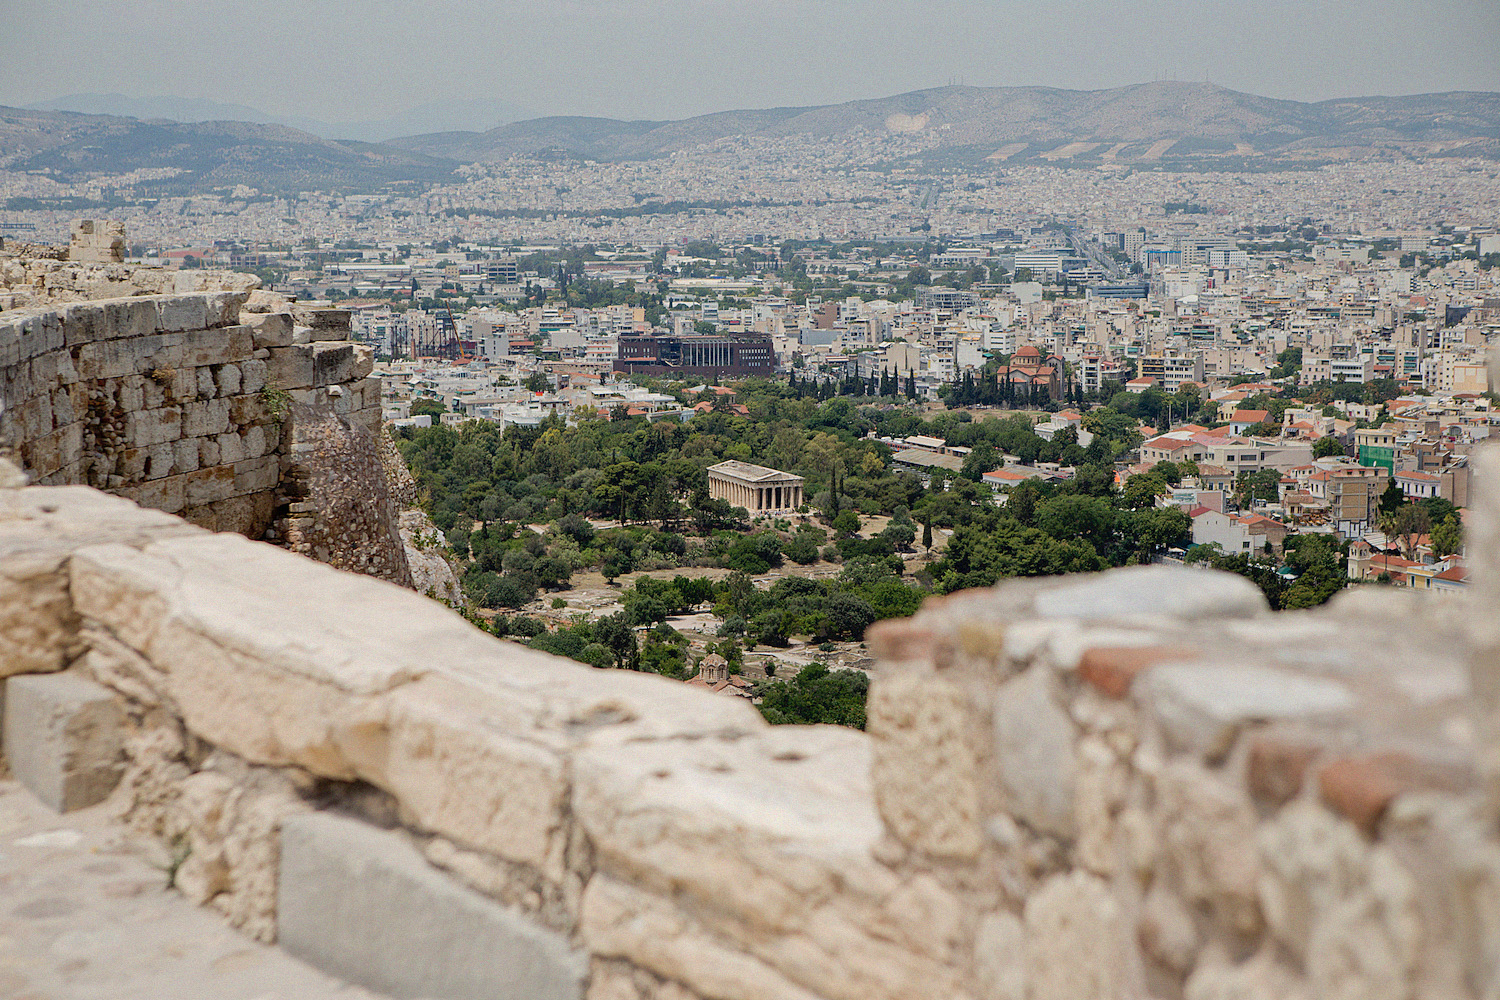 2 days in athens, Athens Guide, sightseeing in athens, Restaurant-Tipps für Athen | www.thegoldenbun.com